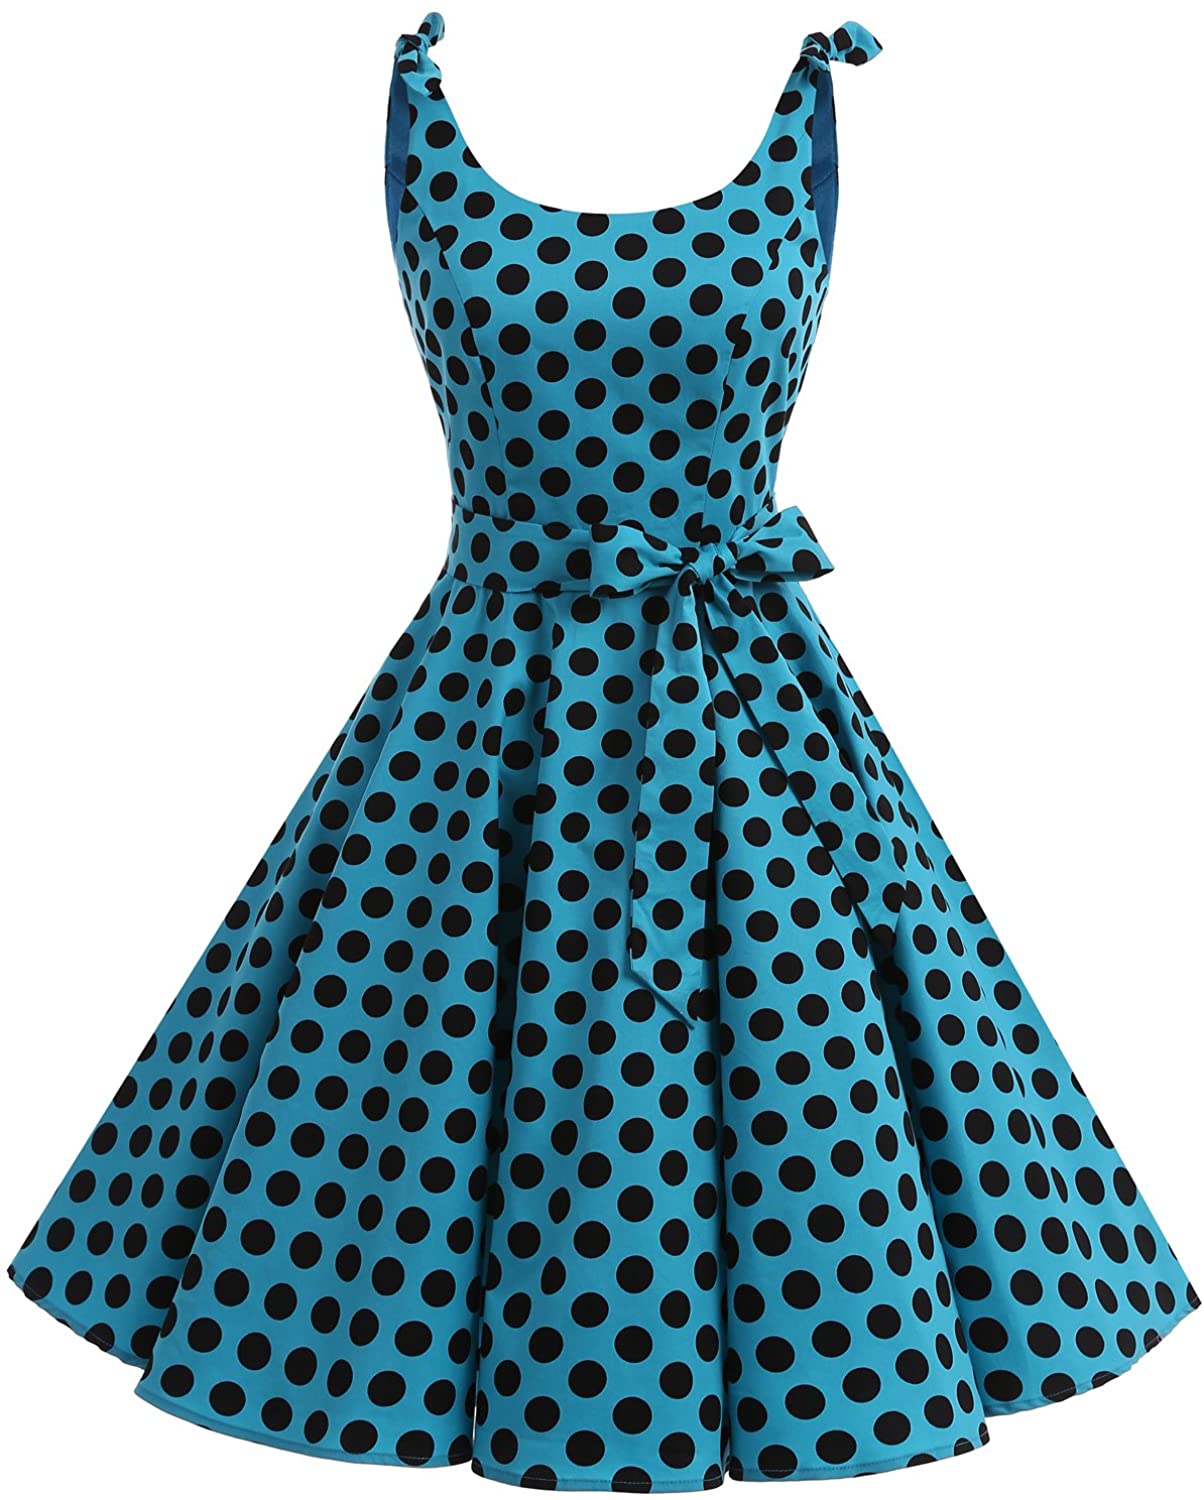 Bbonlinedress 1950's Bowknot Vintage Retro Polka Dot Rockabilly Swing Dress  | eBay